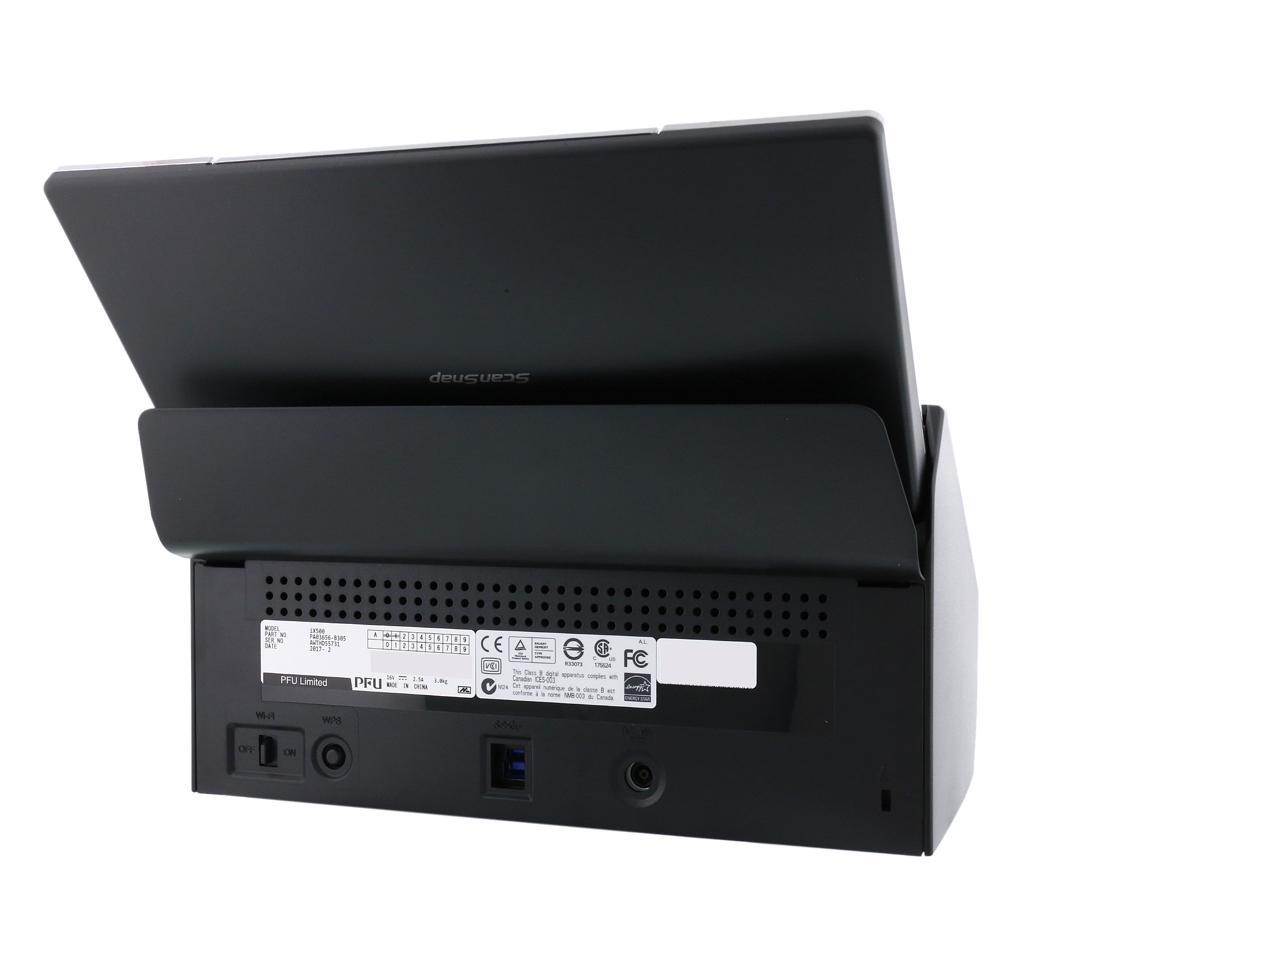 fujitsu scansnap ix500 color duplex desk scanner.